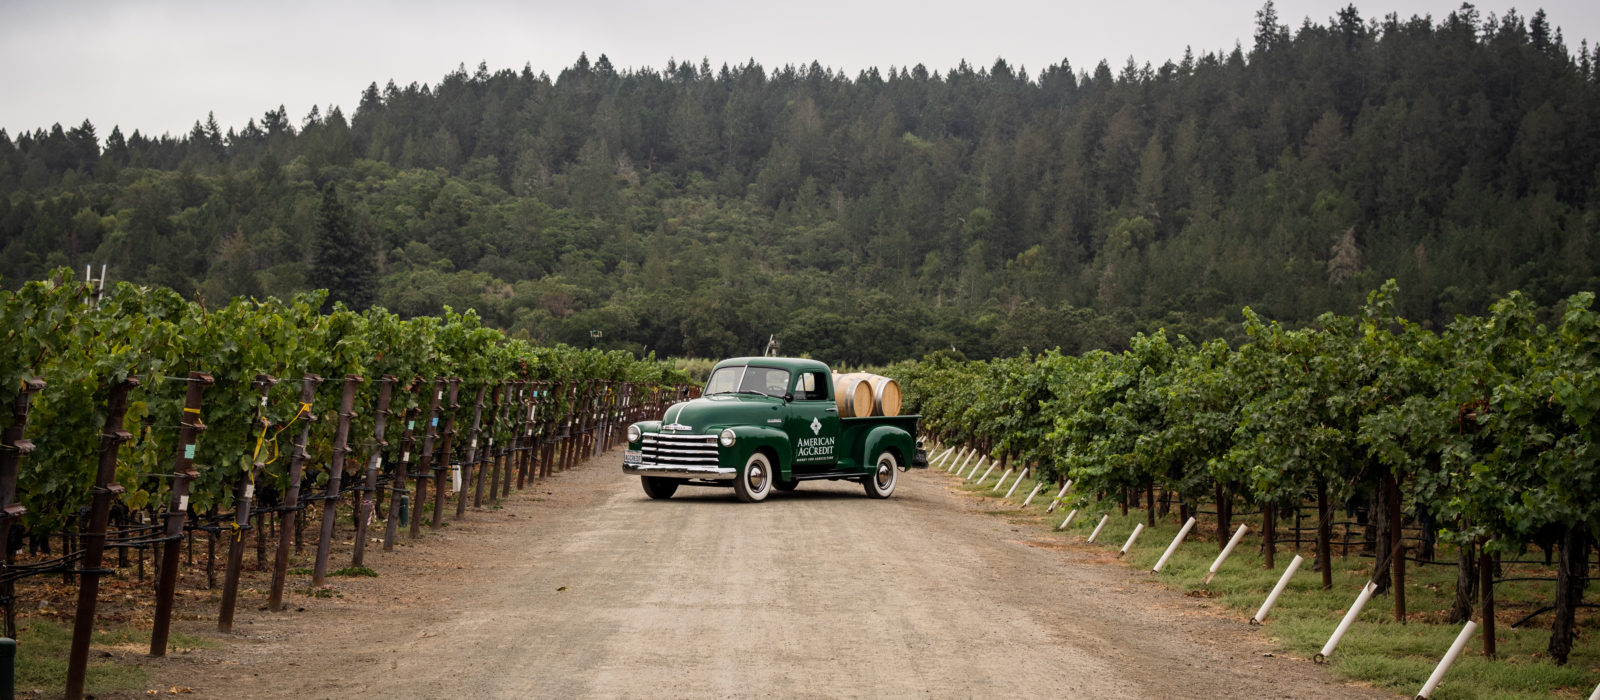 American AgCredit truck in vineyard